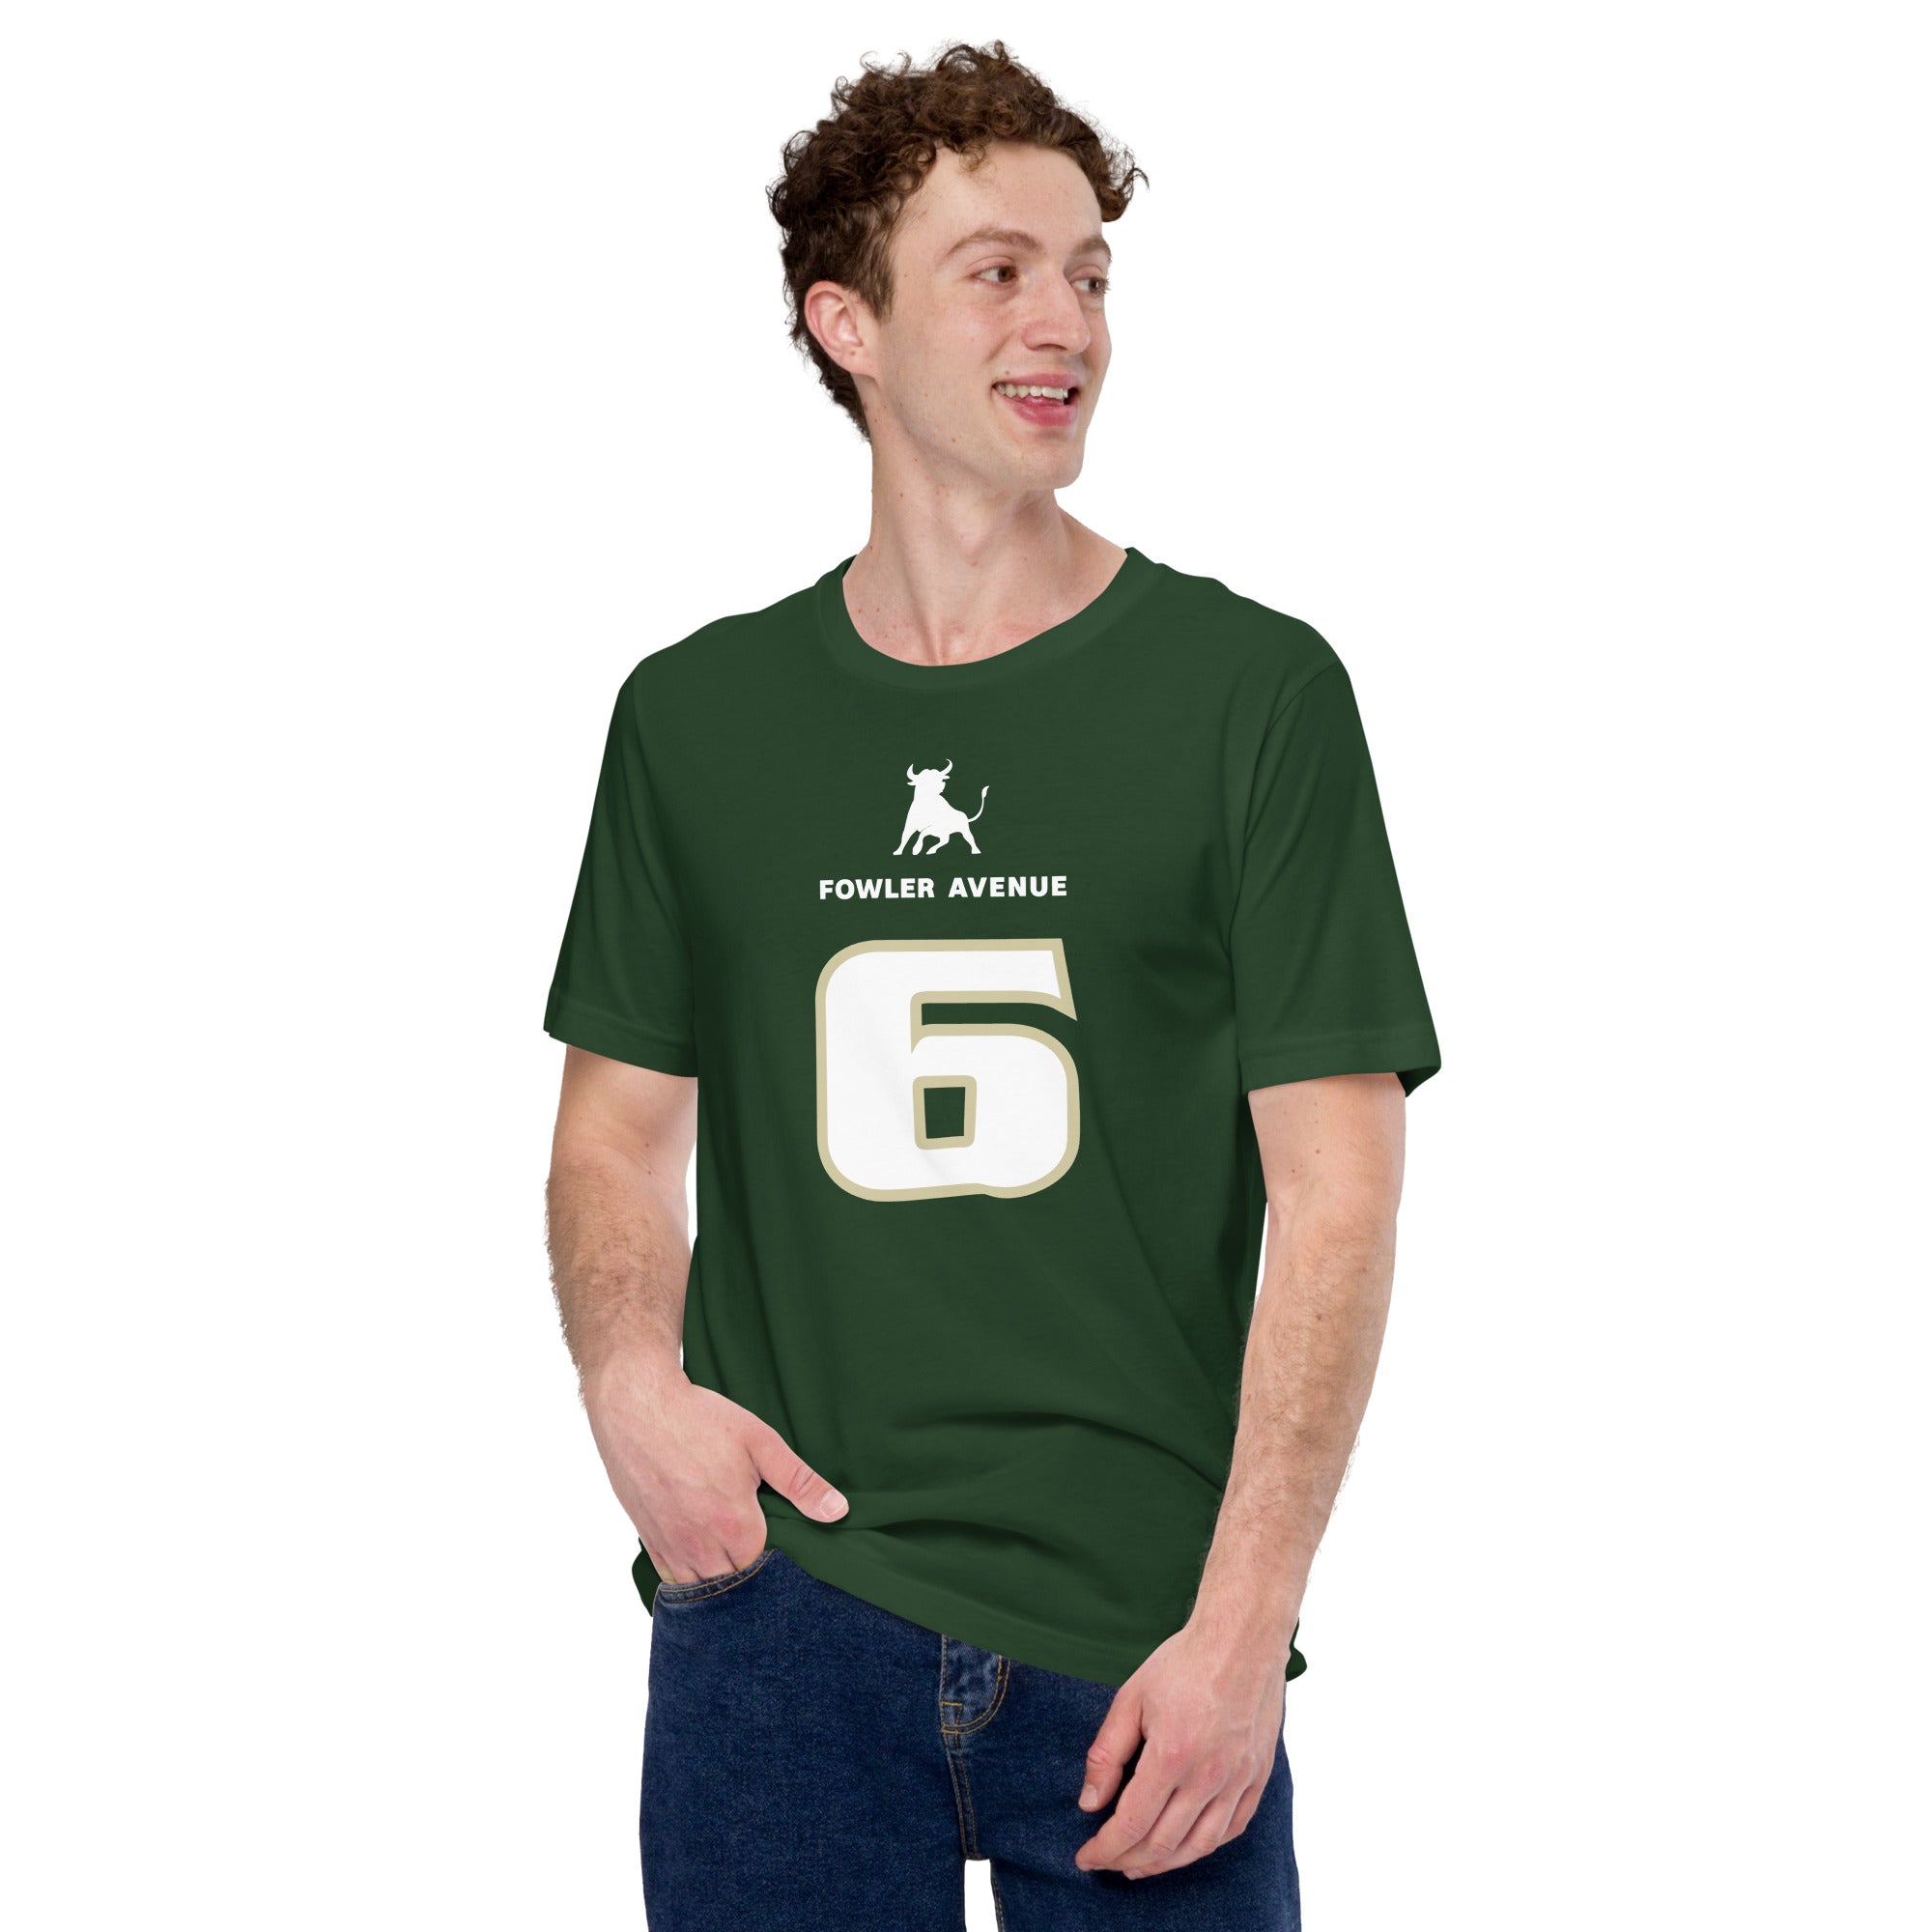 #6 Naiem Simmons - Jersey Shirt